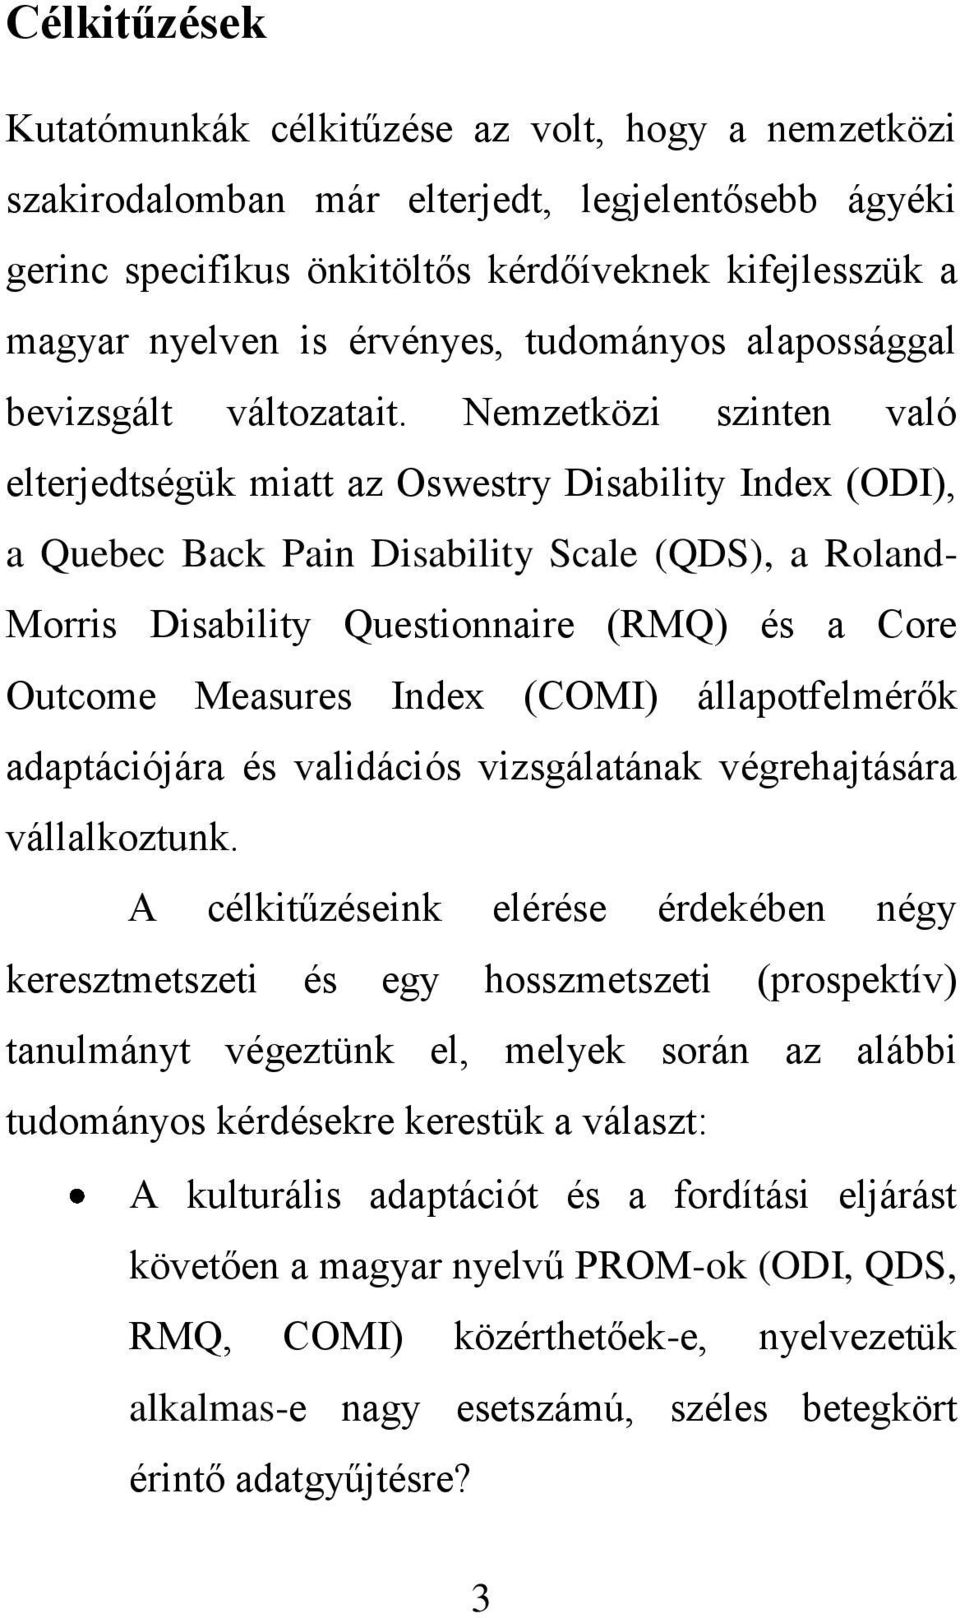 Nemzetközi szinten való elterjedtségük miatt az Oswestry Disability Index (ODI), a Quebec Back Pain Disability Scale (QDS), a Roland- Morris Disability Questionnaire (RMQ) és a Core Outcome Measures